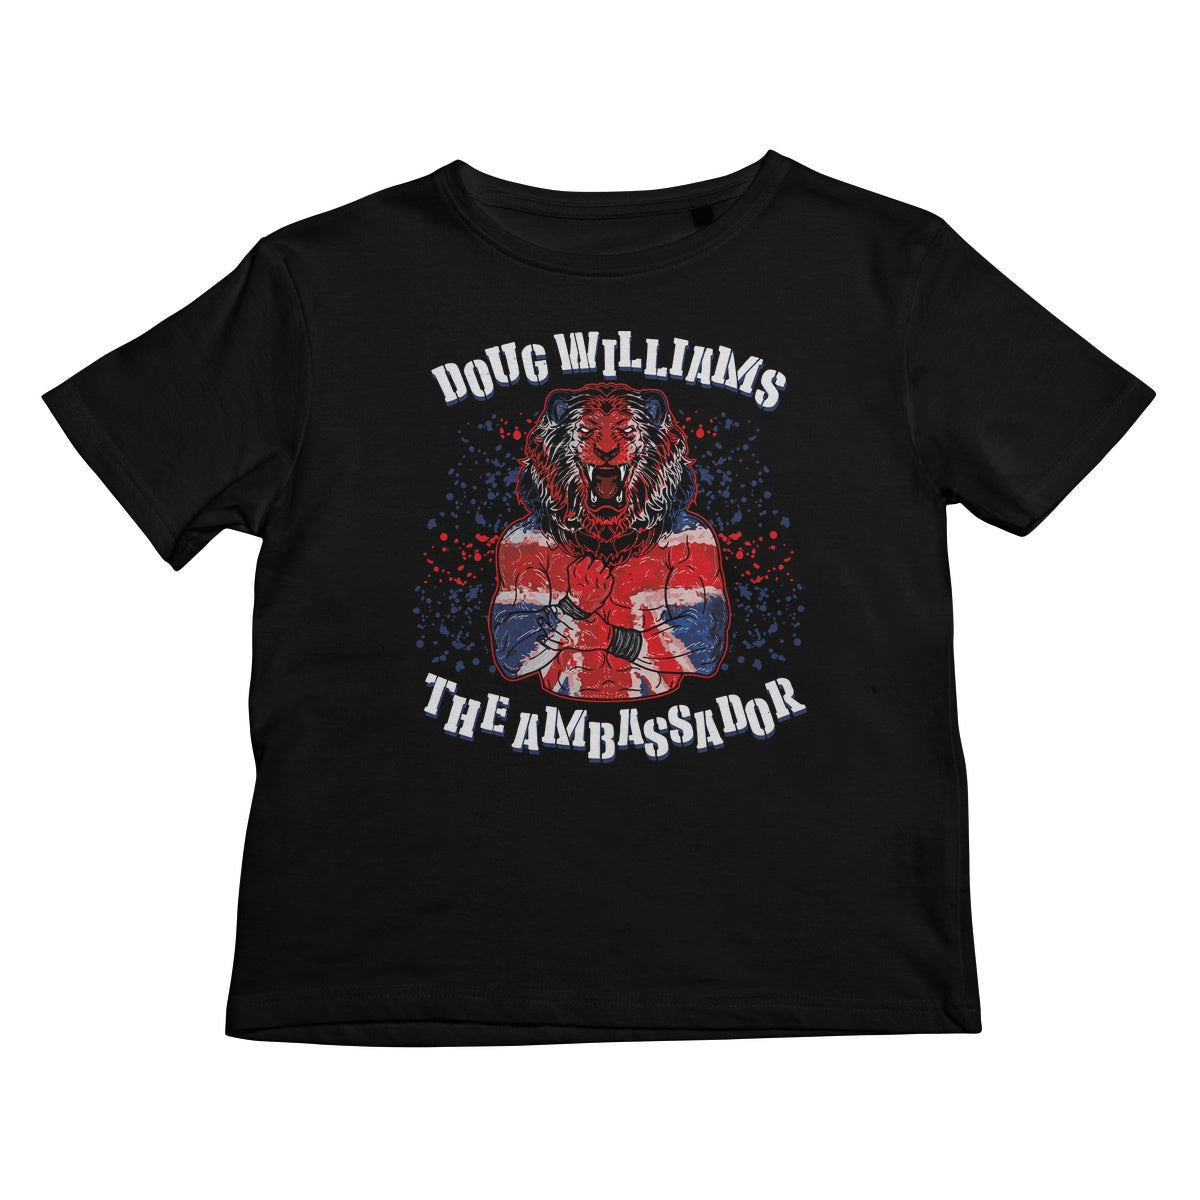 Doug Williams The Ambassador  Kids T-Shirt